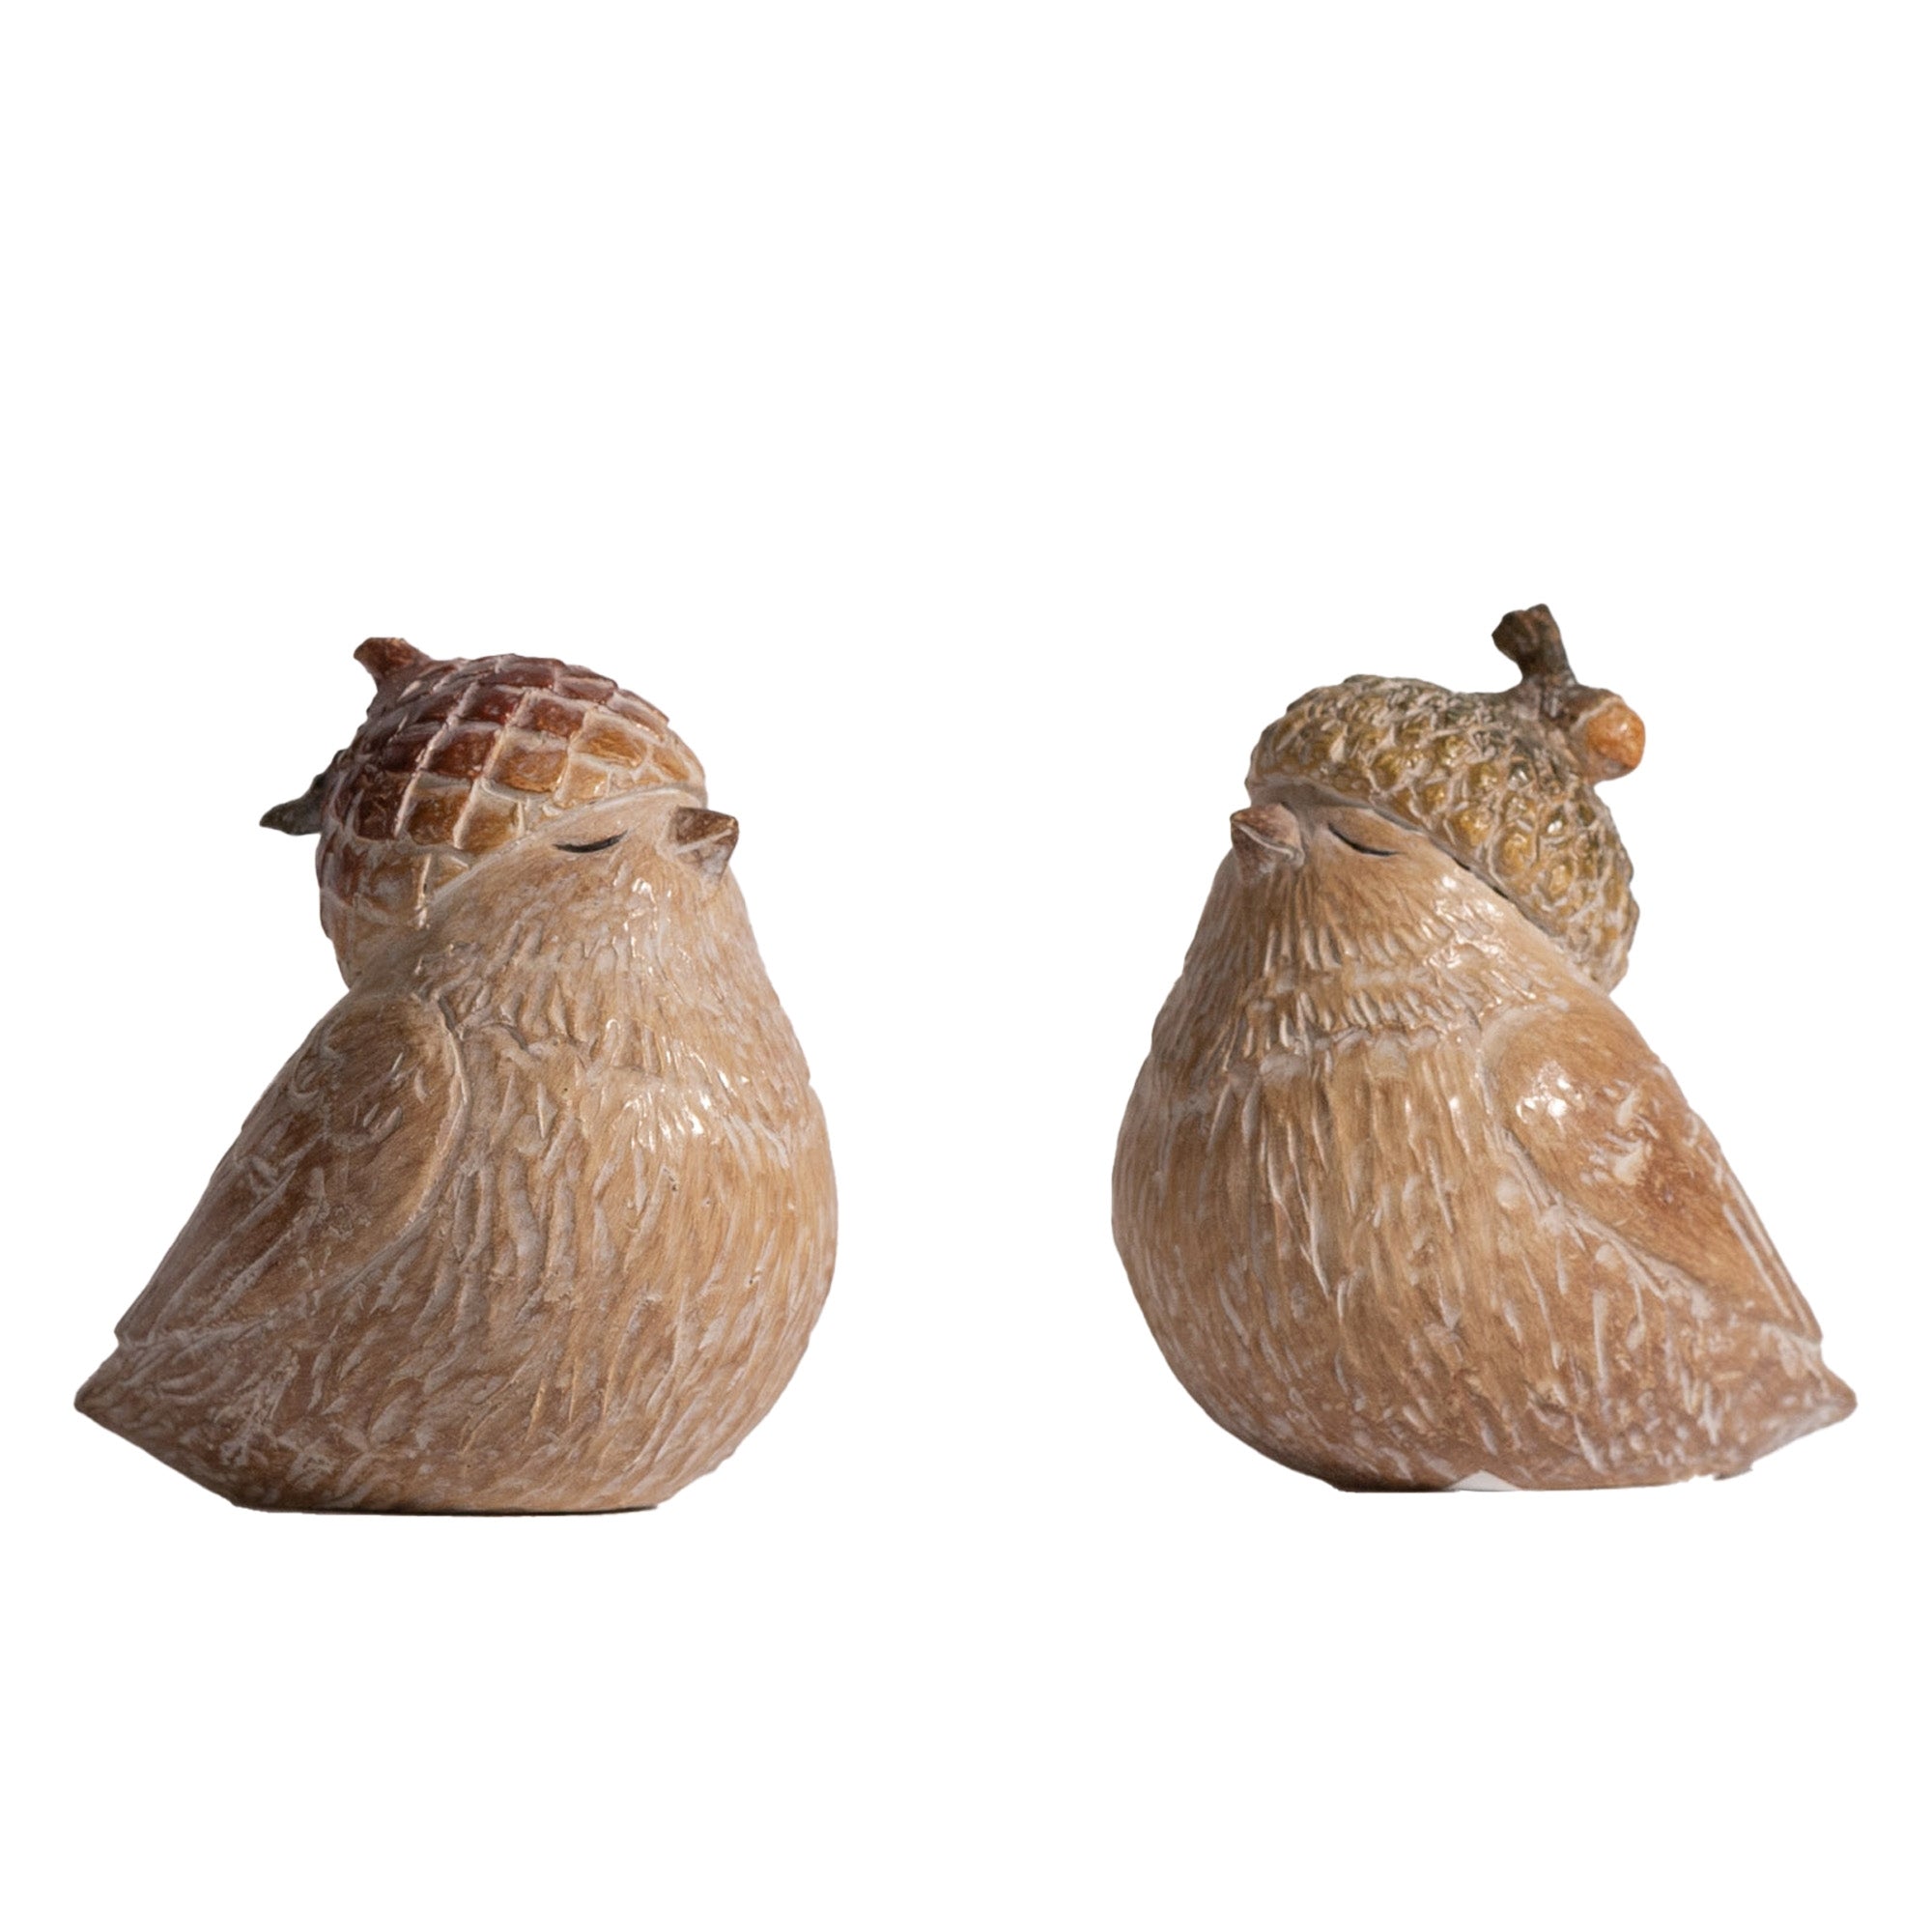 Harvest Bird with Acorn Hat Figurine (Set of 6)